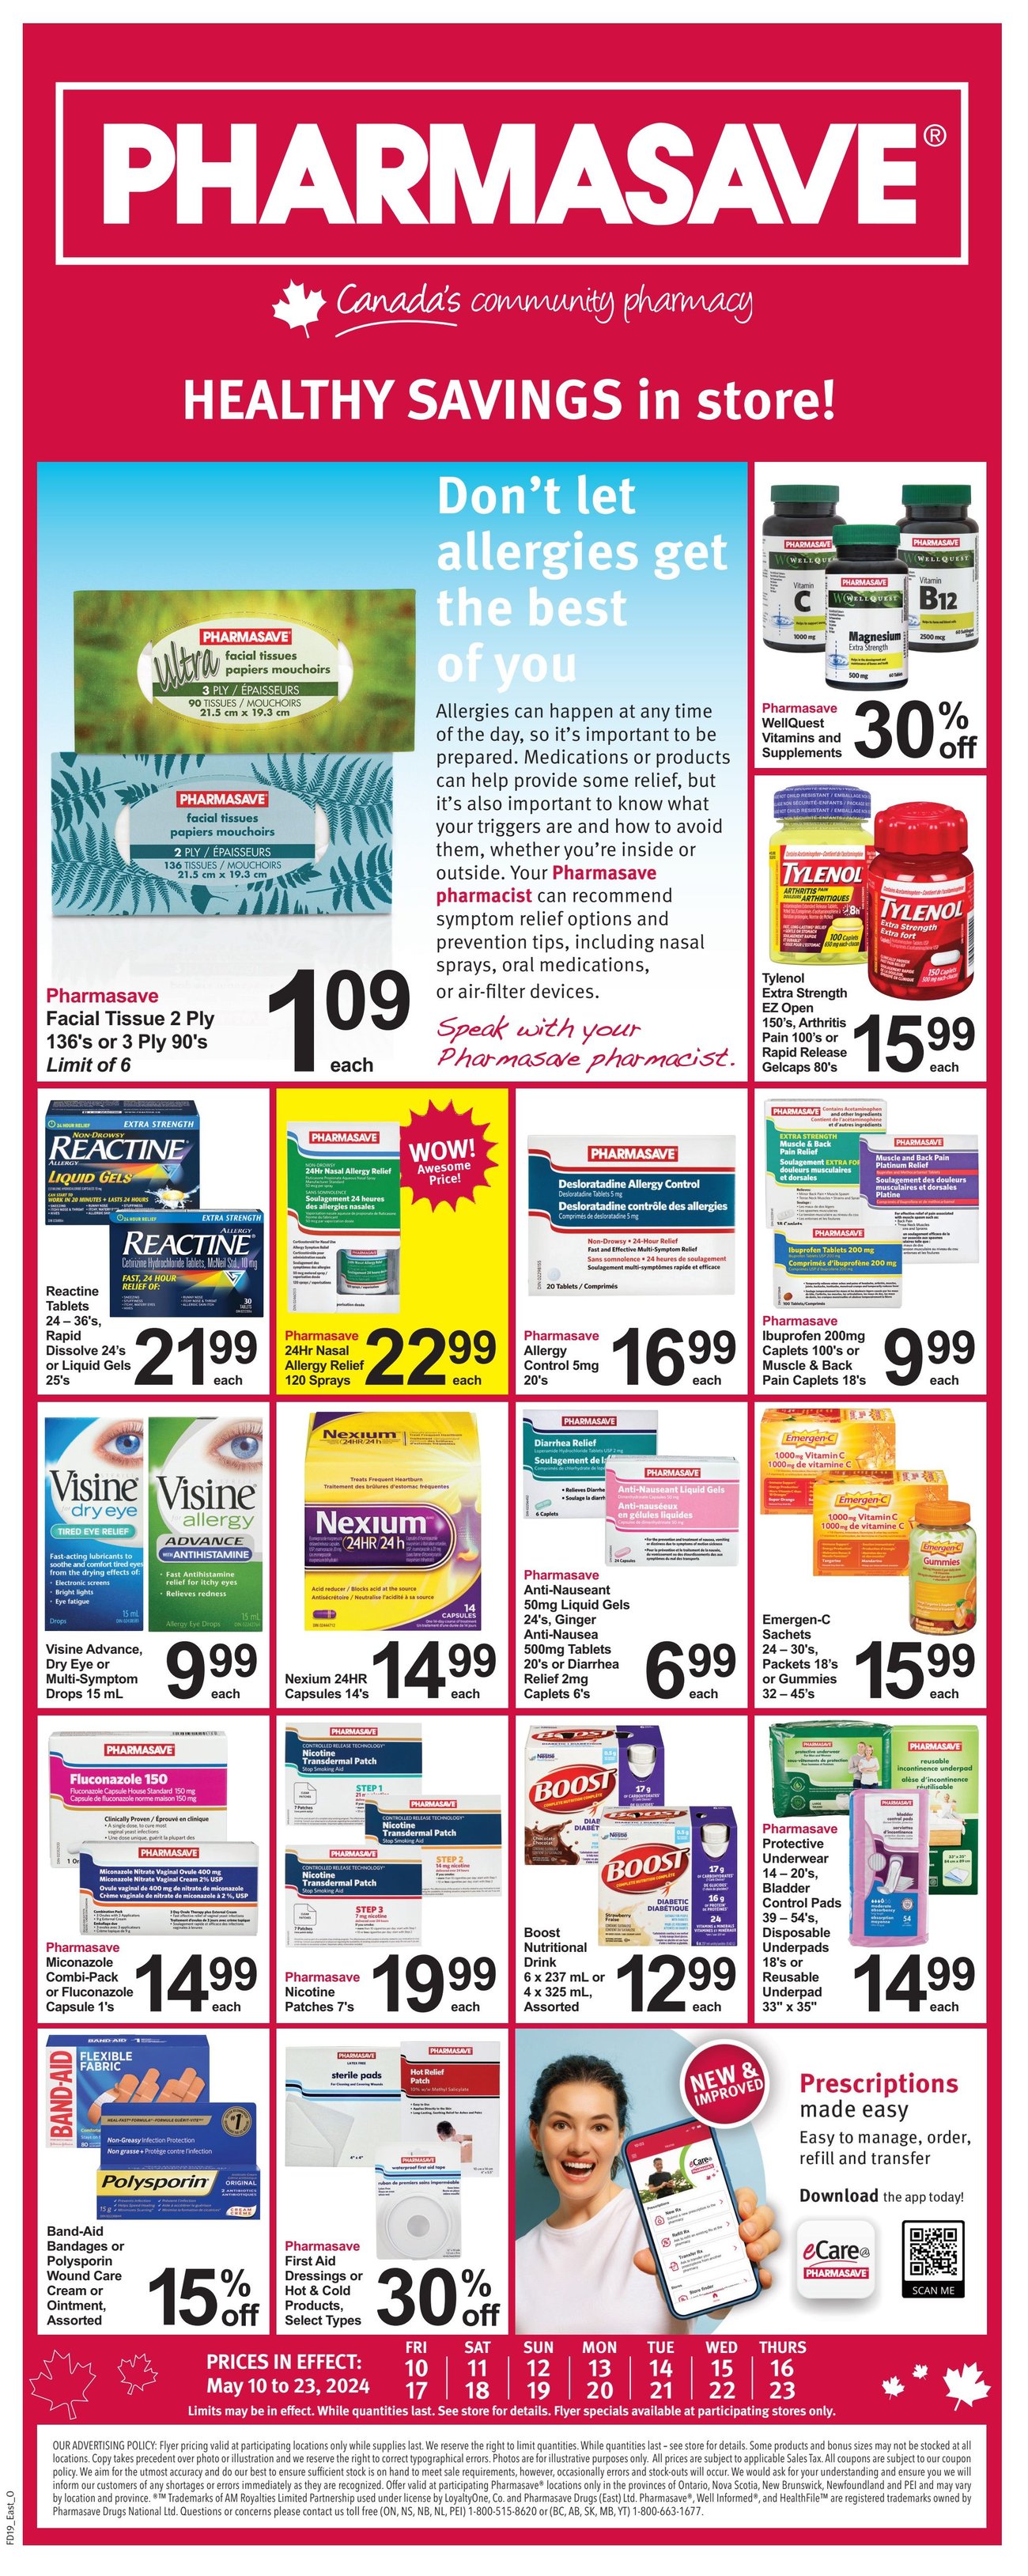 Pharmasave - Ontario - Flyer Specials - Page 2